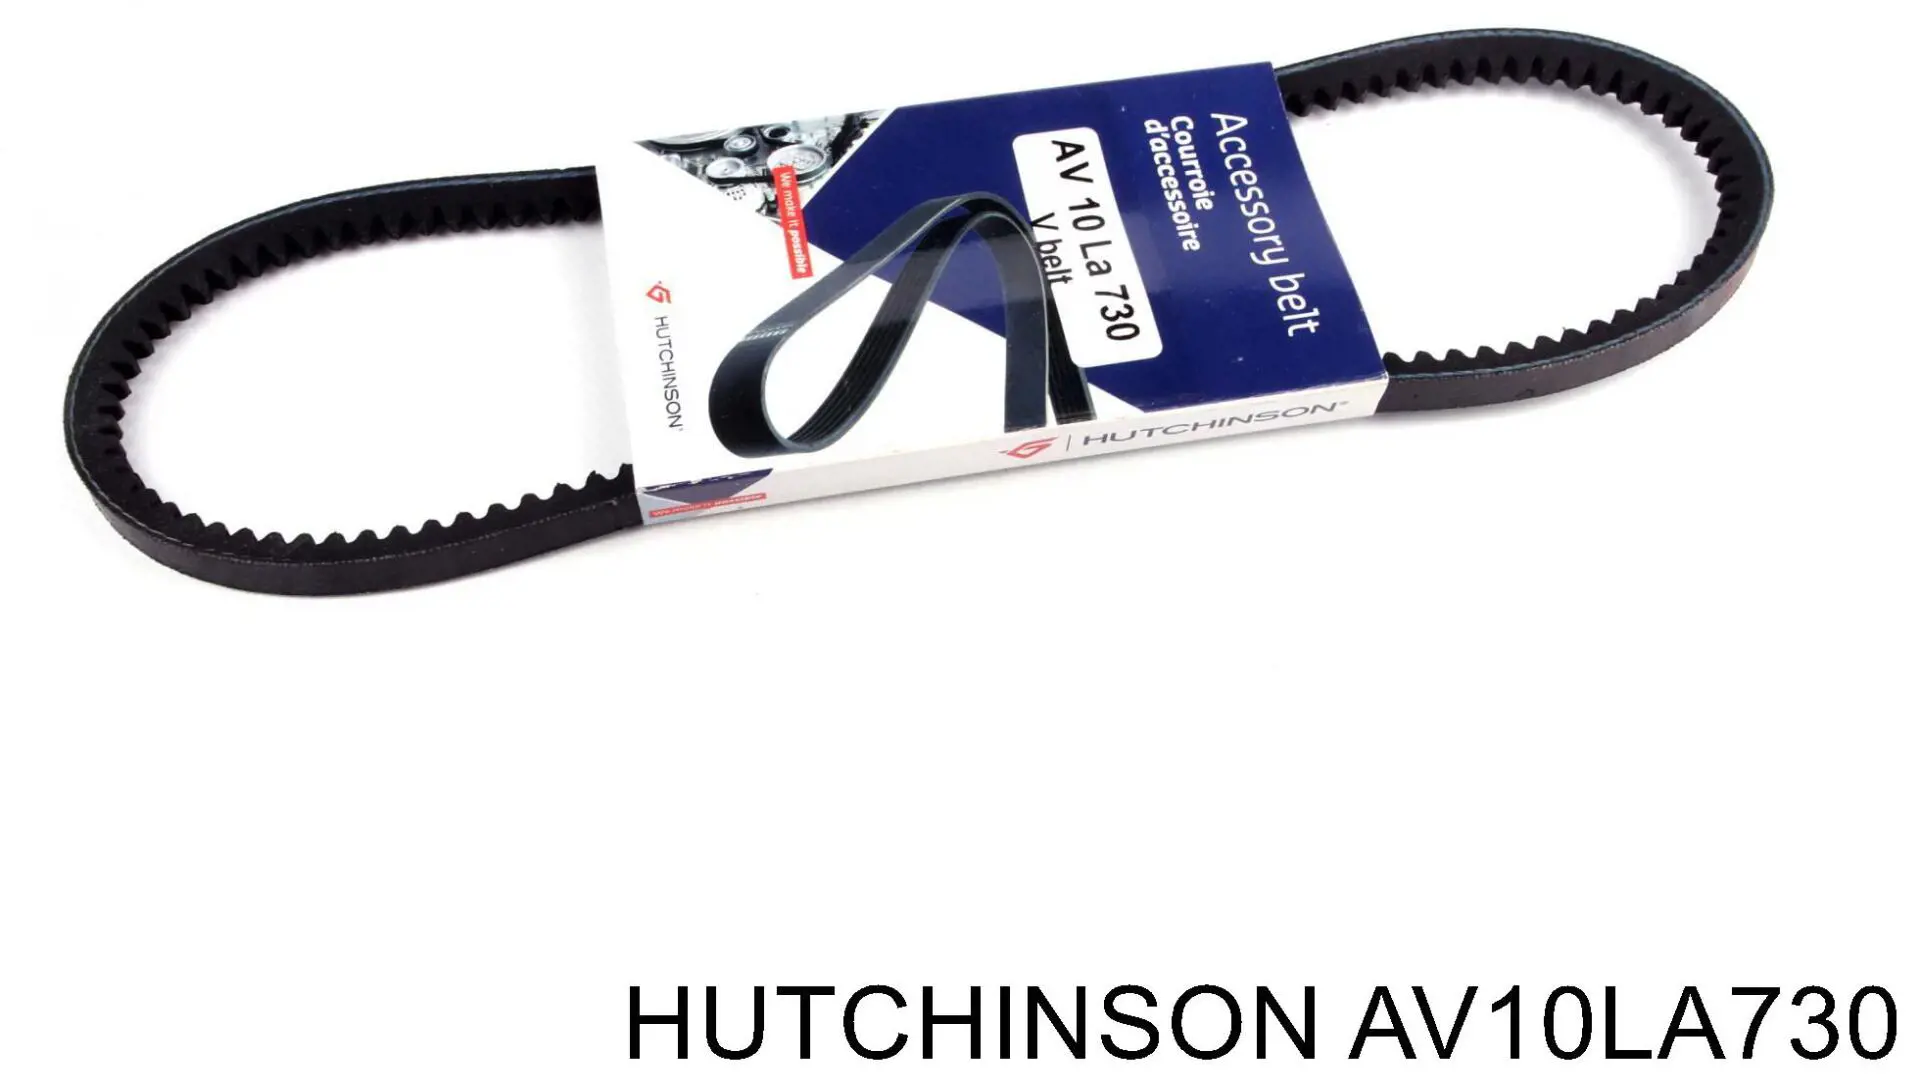 AV10LA730 Hutchinson correa trapezoidal